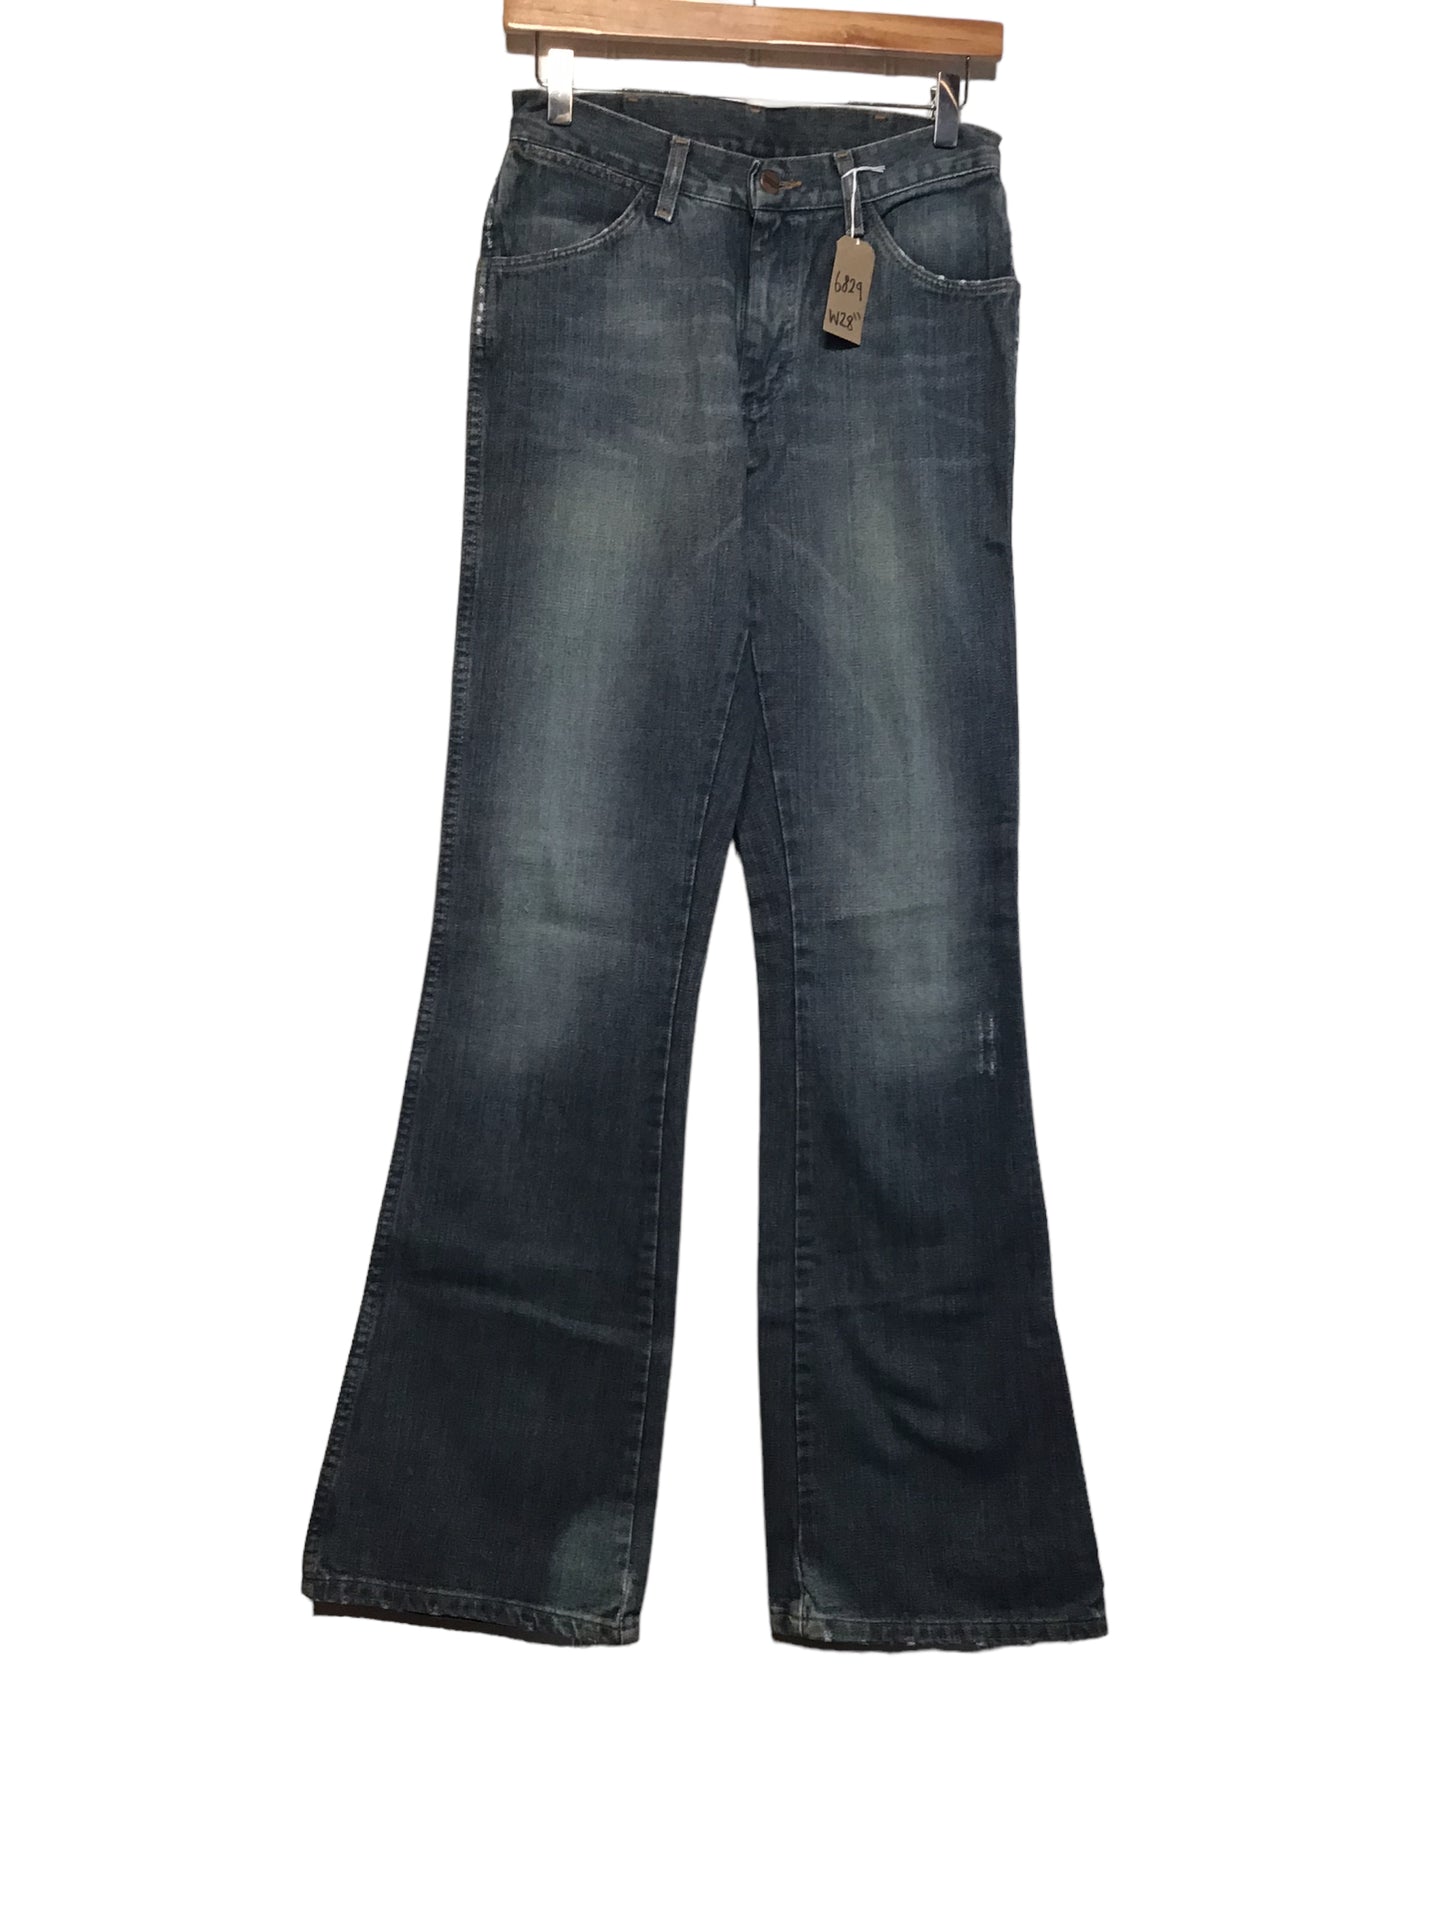 Wrangler Jeans (28x33)